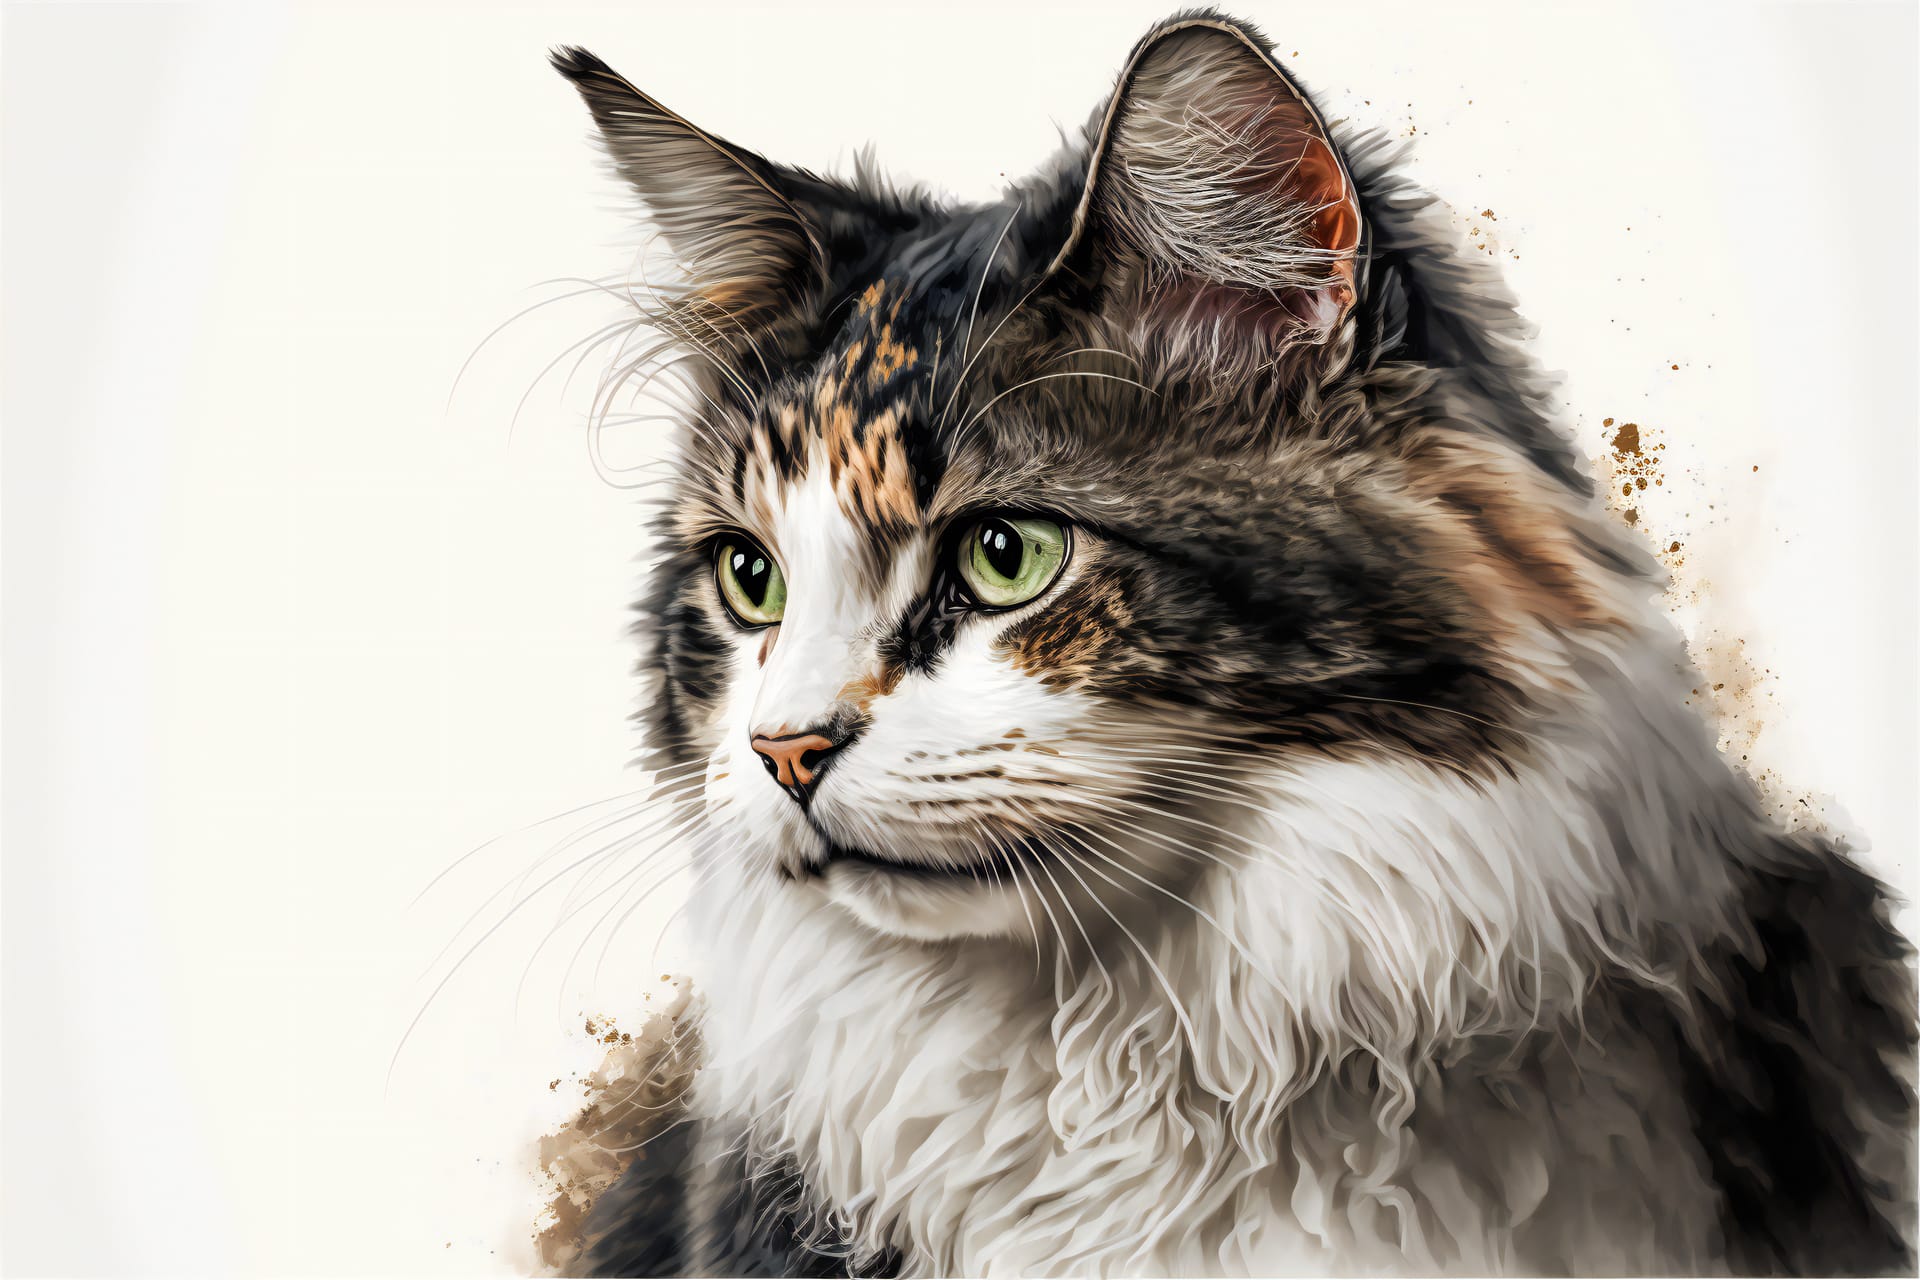 Cat portrait white clean background creative digital illustration painting